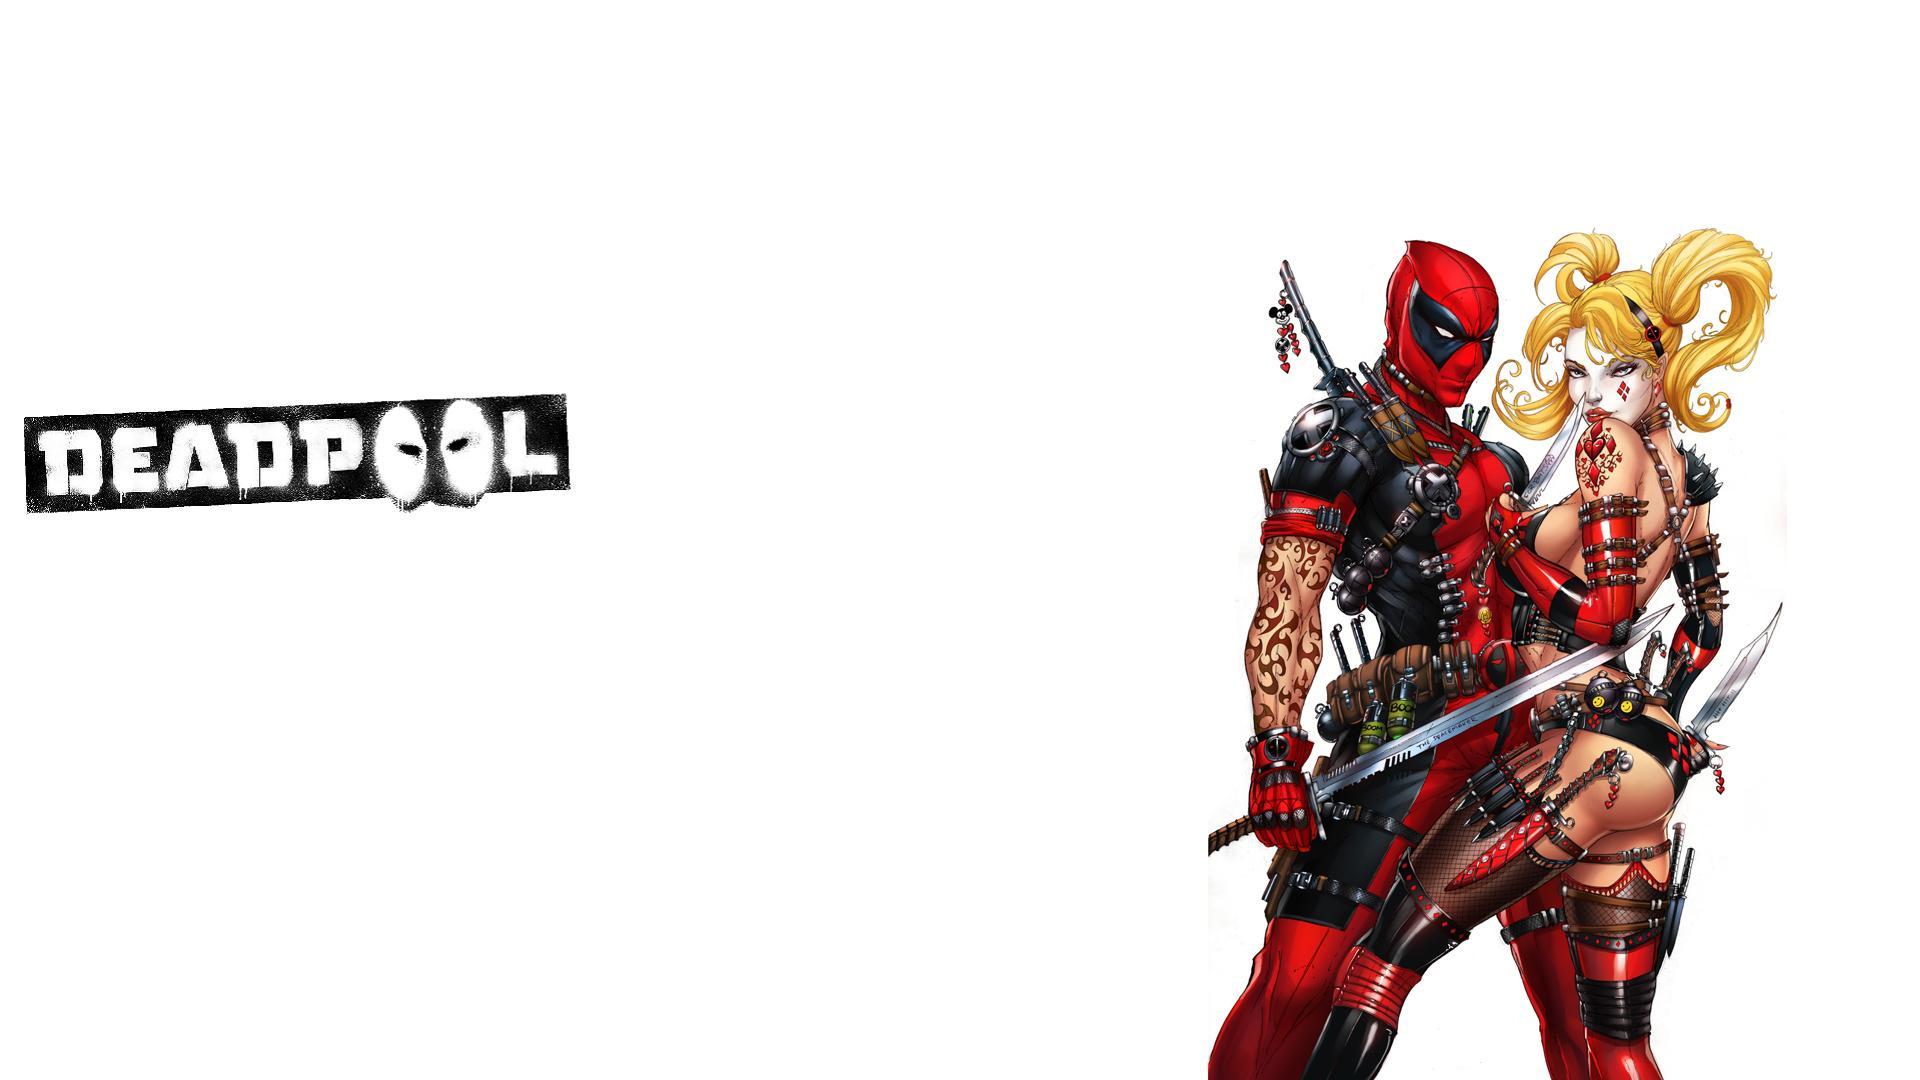 Deadpool n Harley Quinn wallpaper enjoy (1080p)